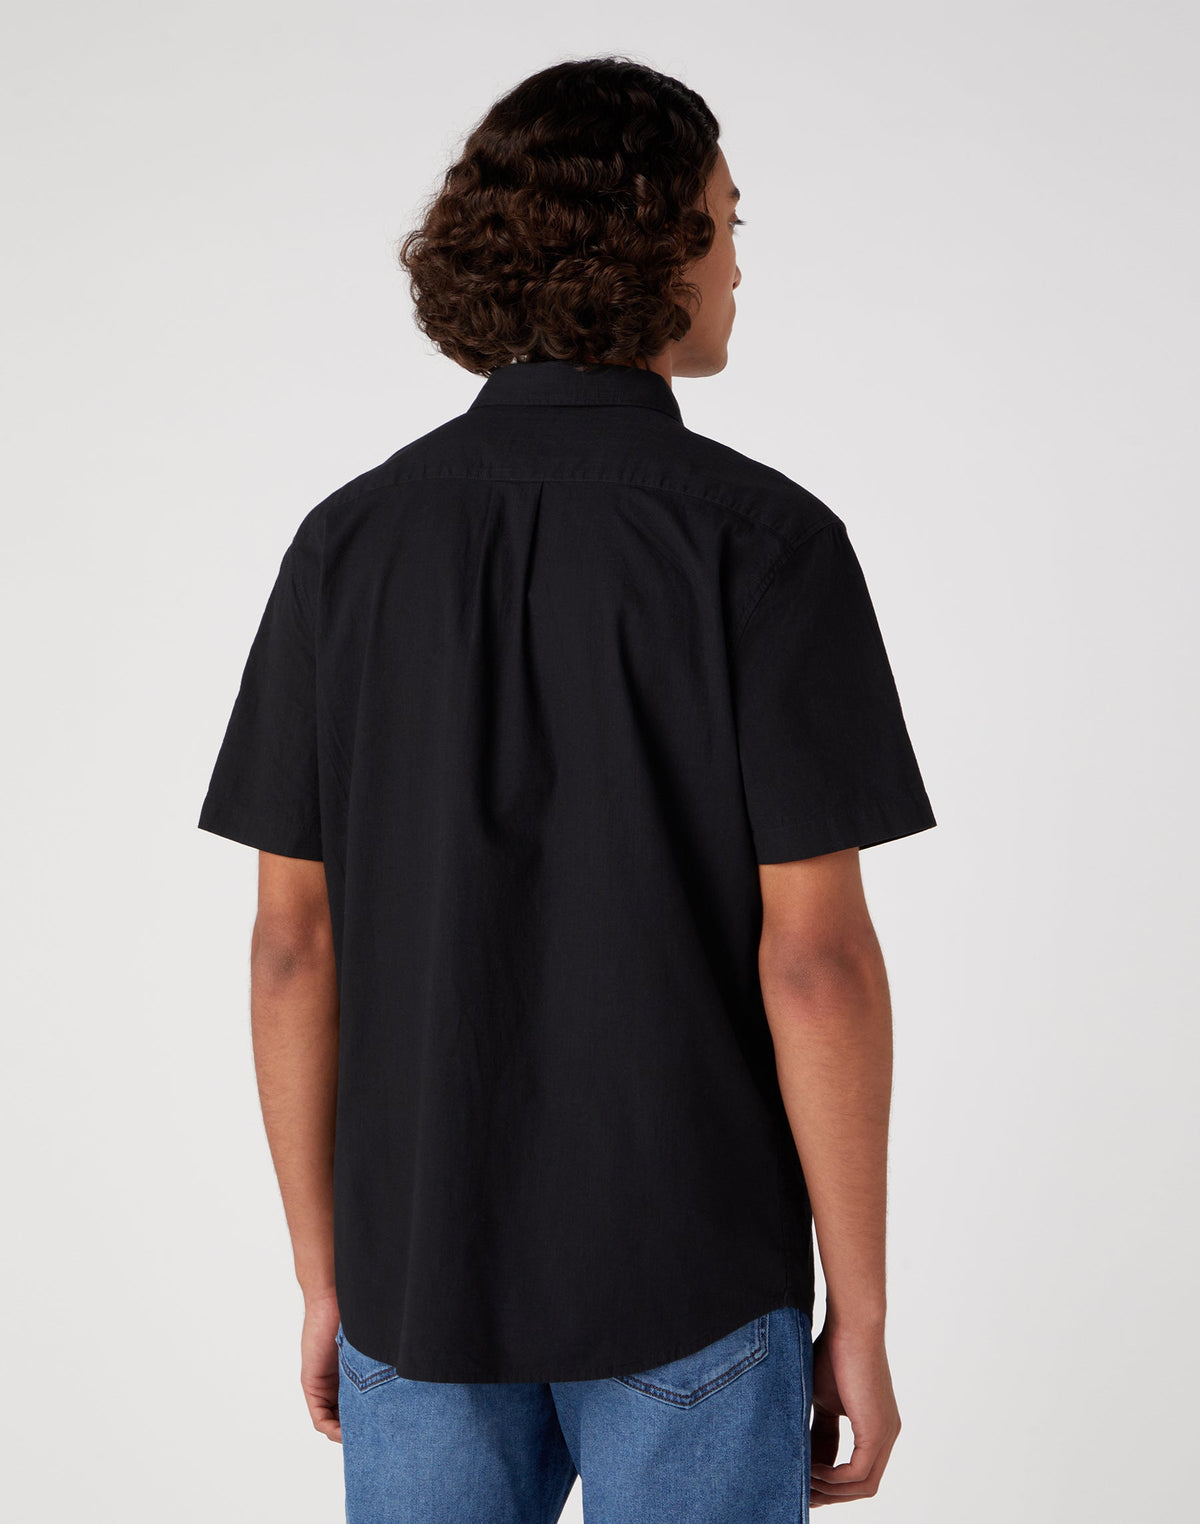 Short Sleeve One Pocket Shirt in Black